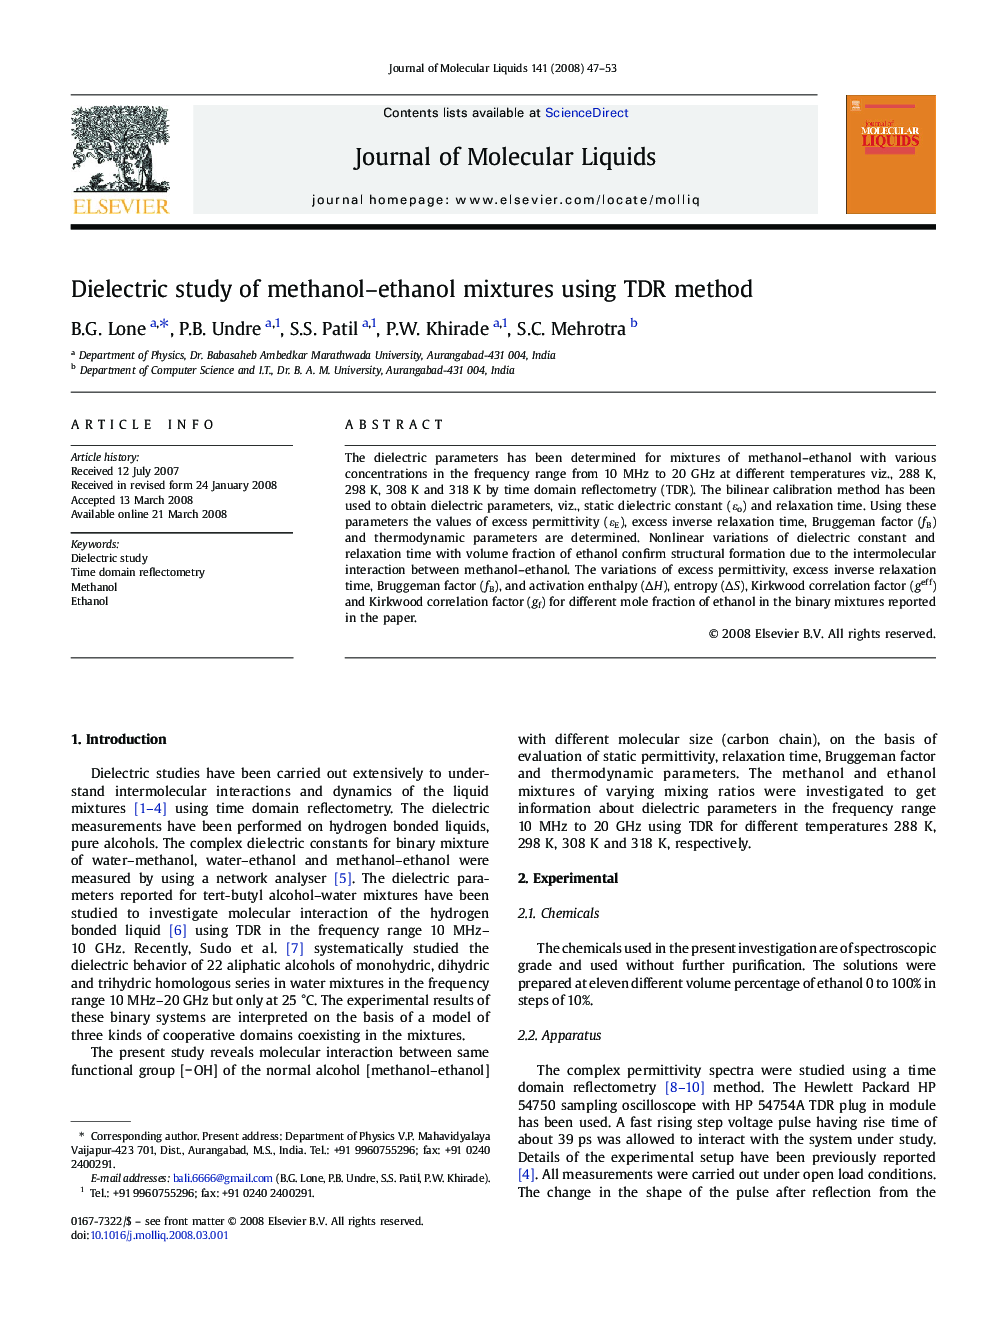 Dielectric study of methanol-ethanol mixtures using TDR method